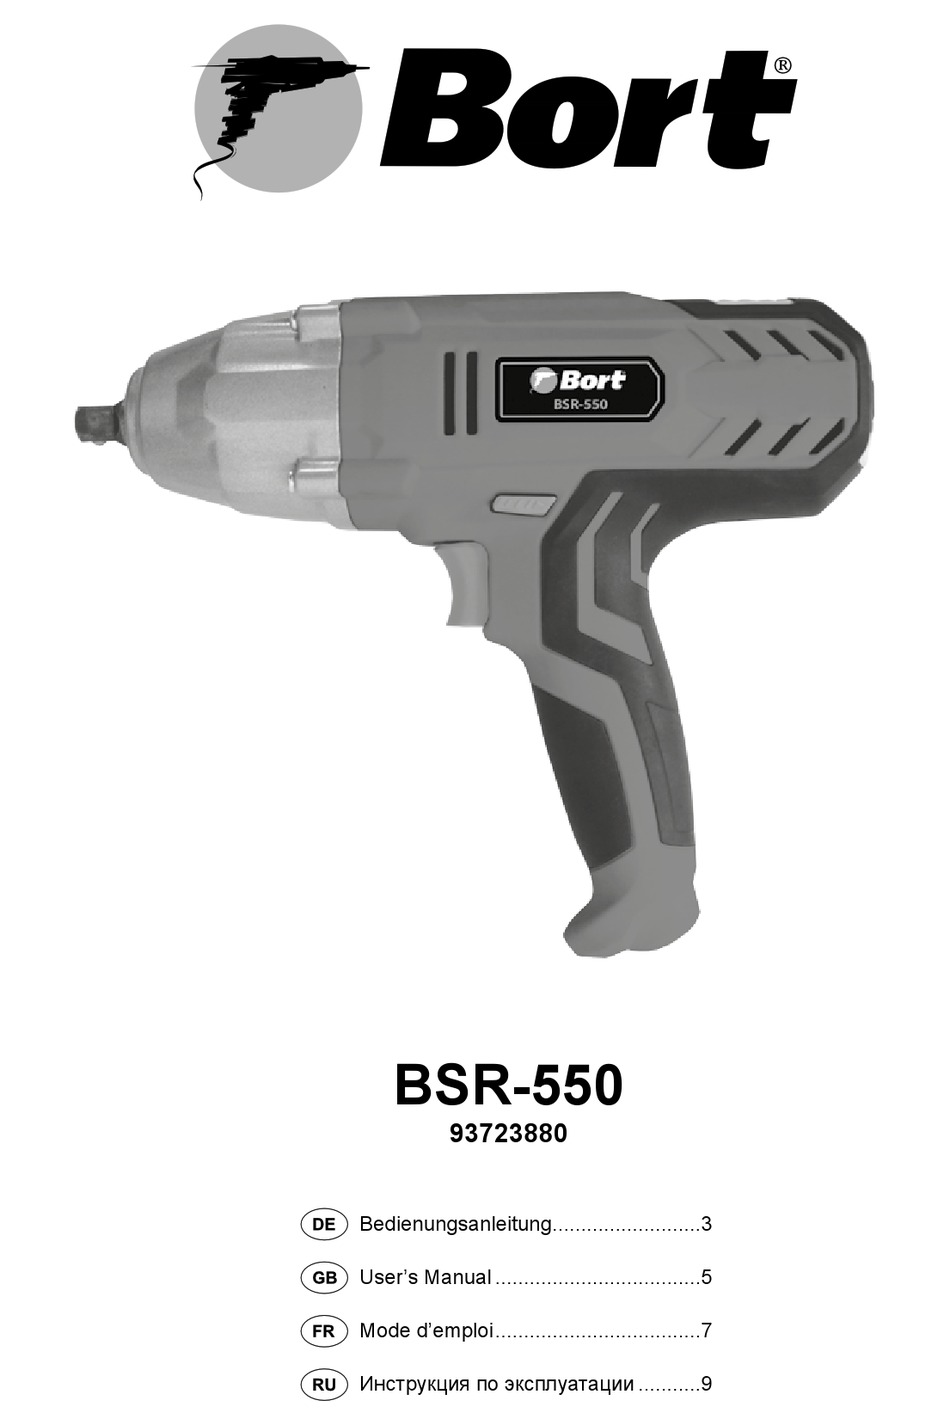 BORT BSR-550 USER MANUAL Pdf Download | ManualsLib